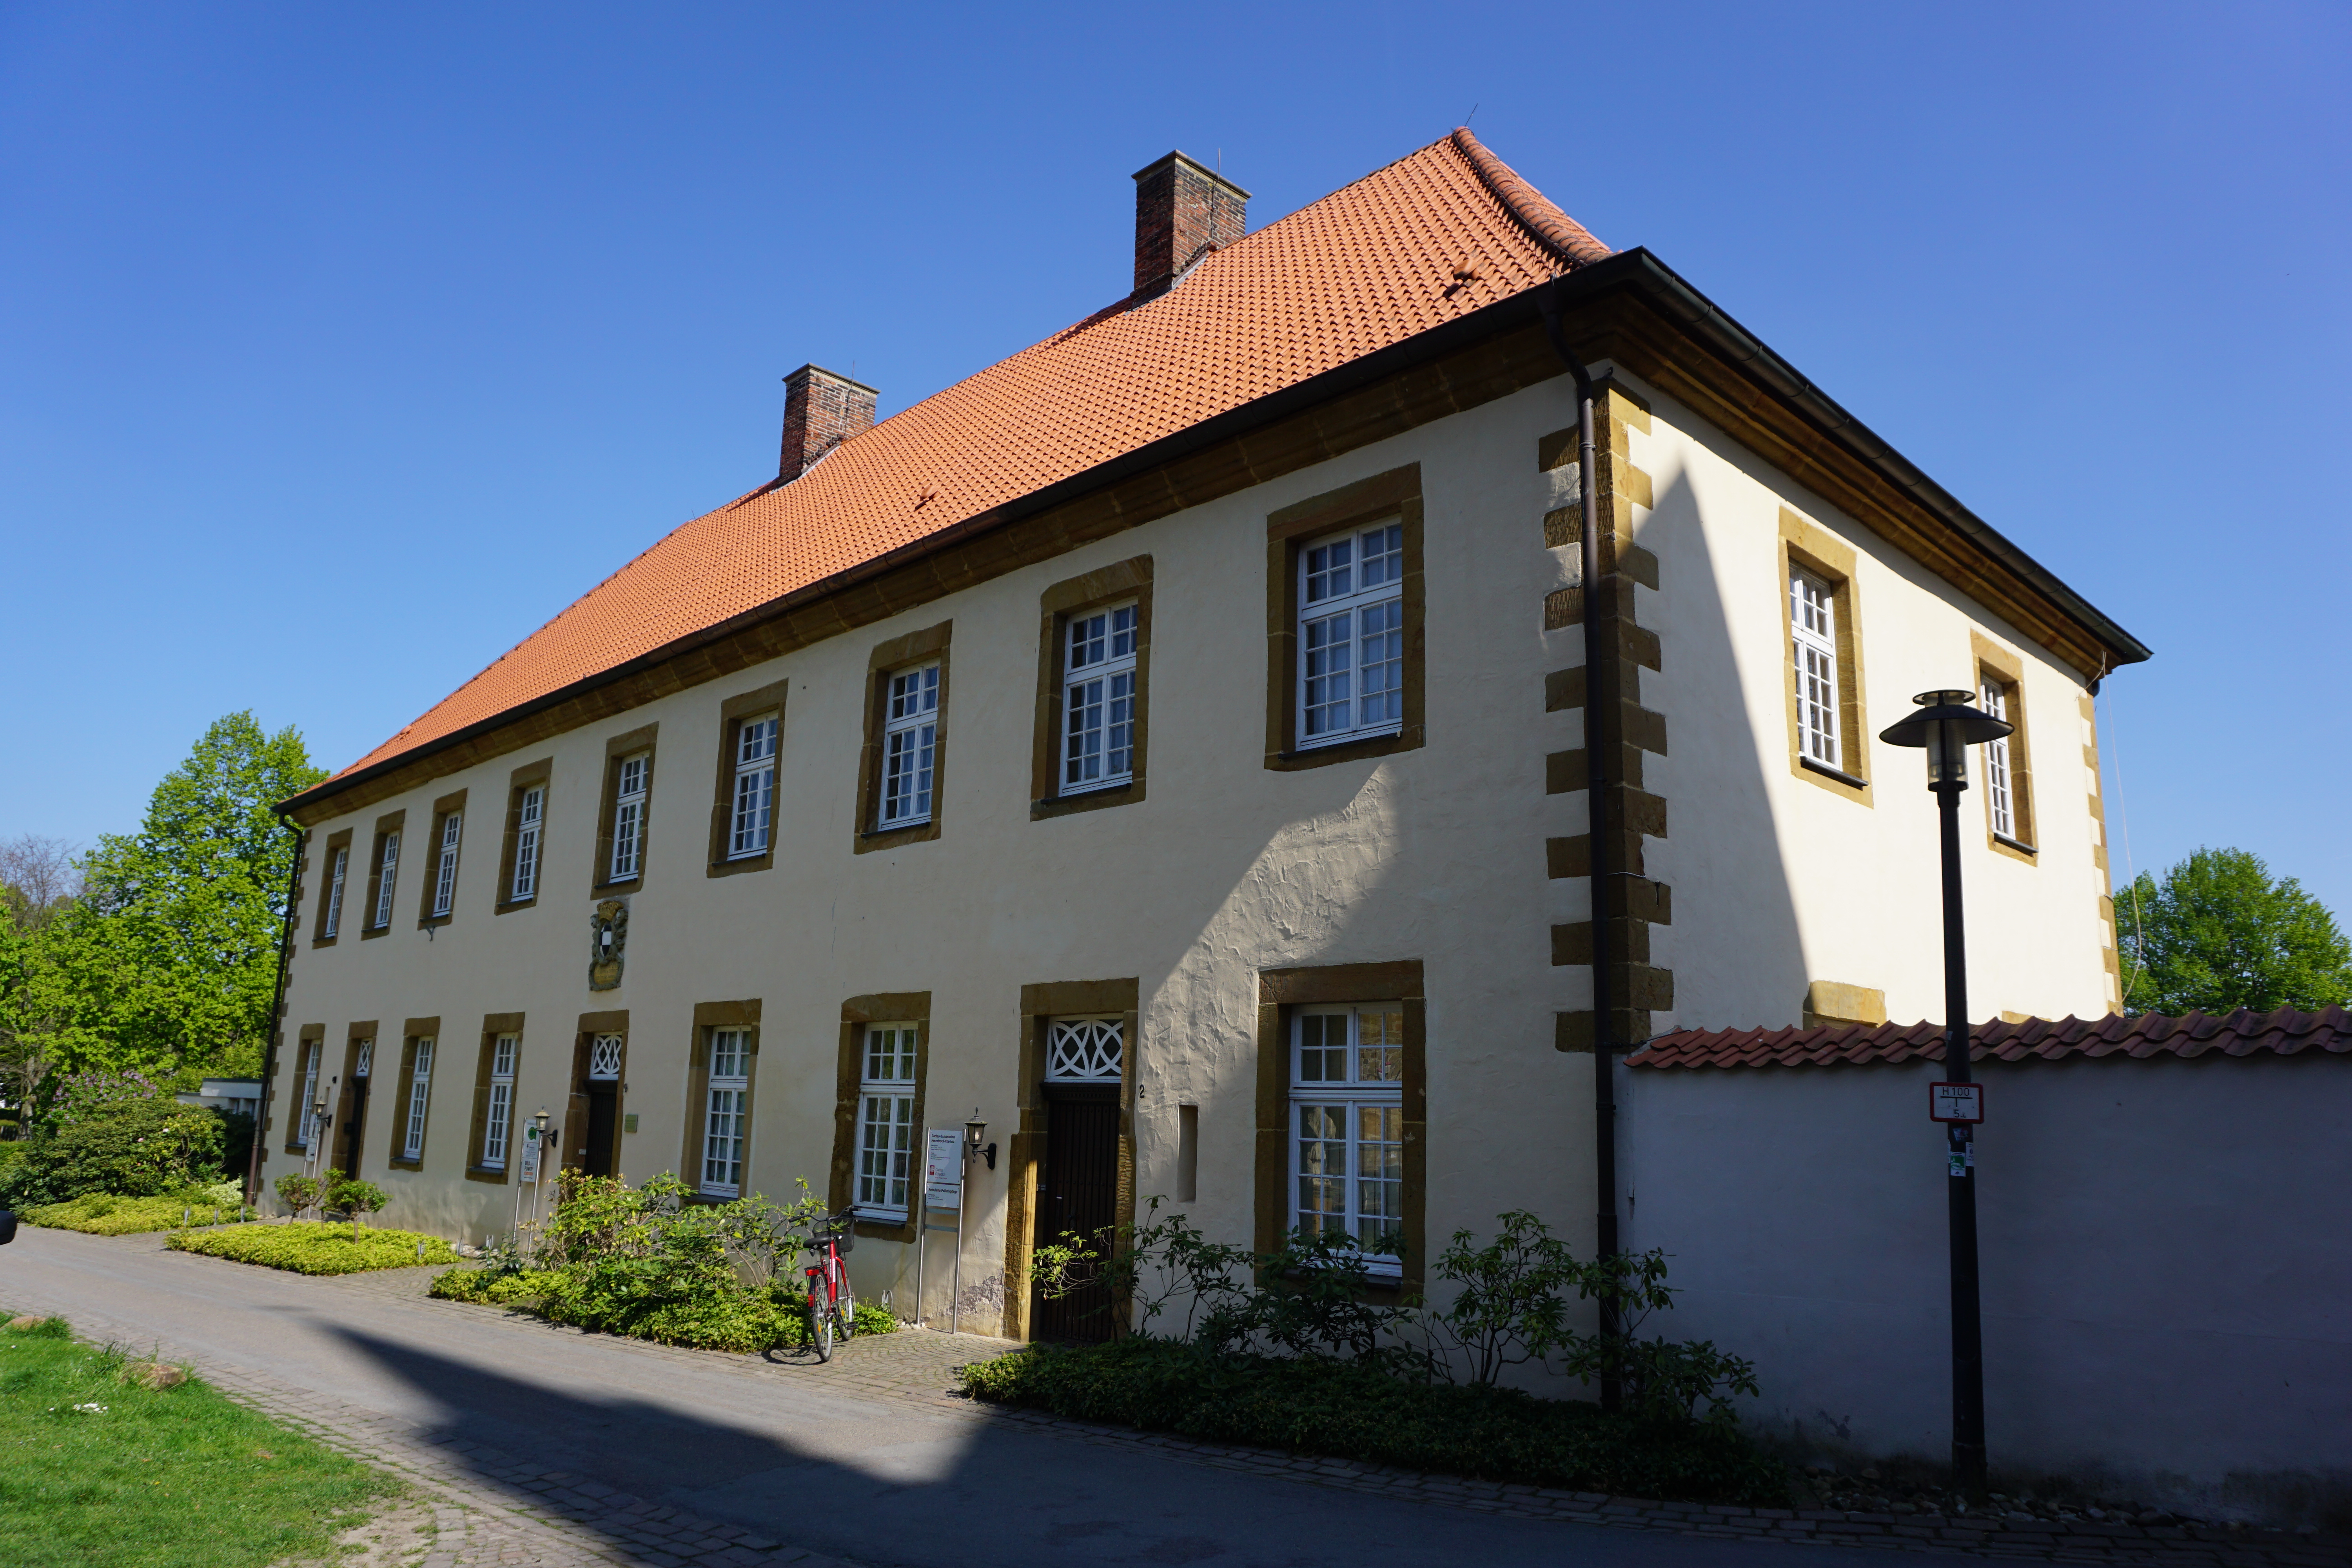 Pfarrhaus der ehemaligen Klosteranlage Herzebrock, Herzebrock-Clarholz.
